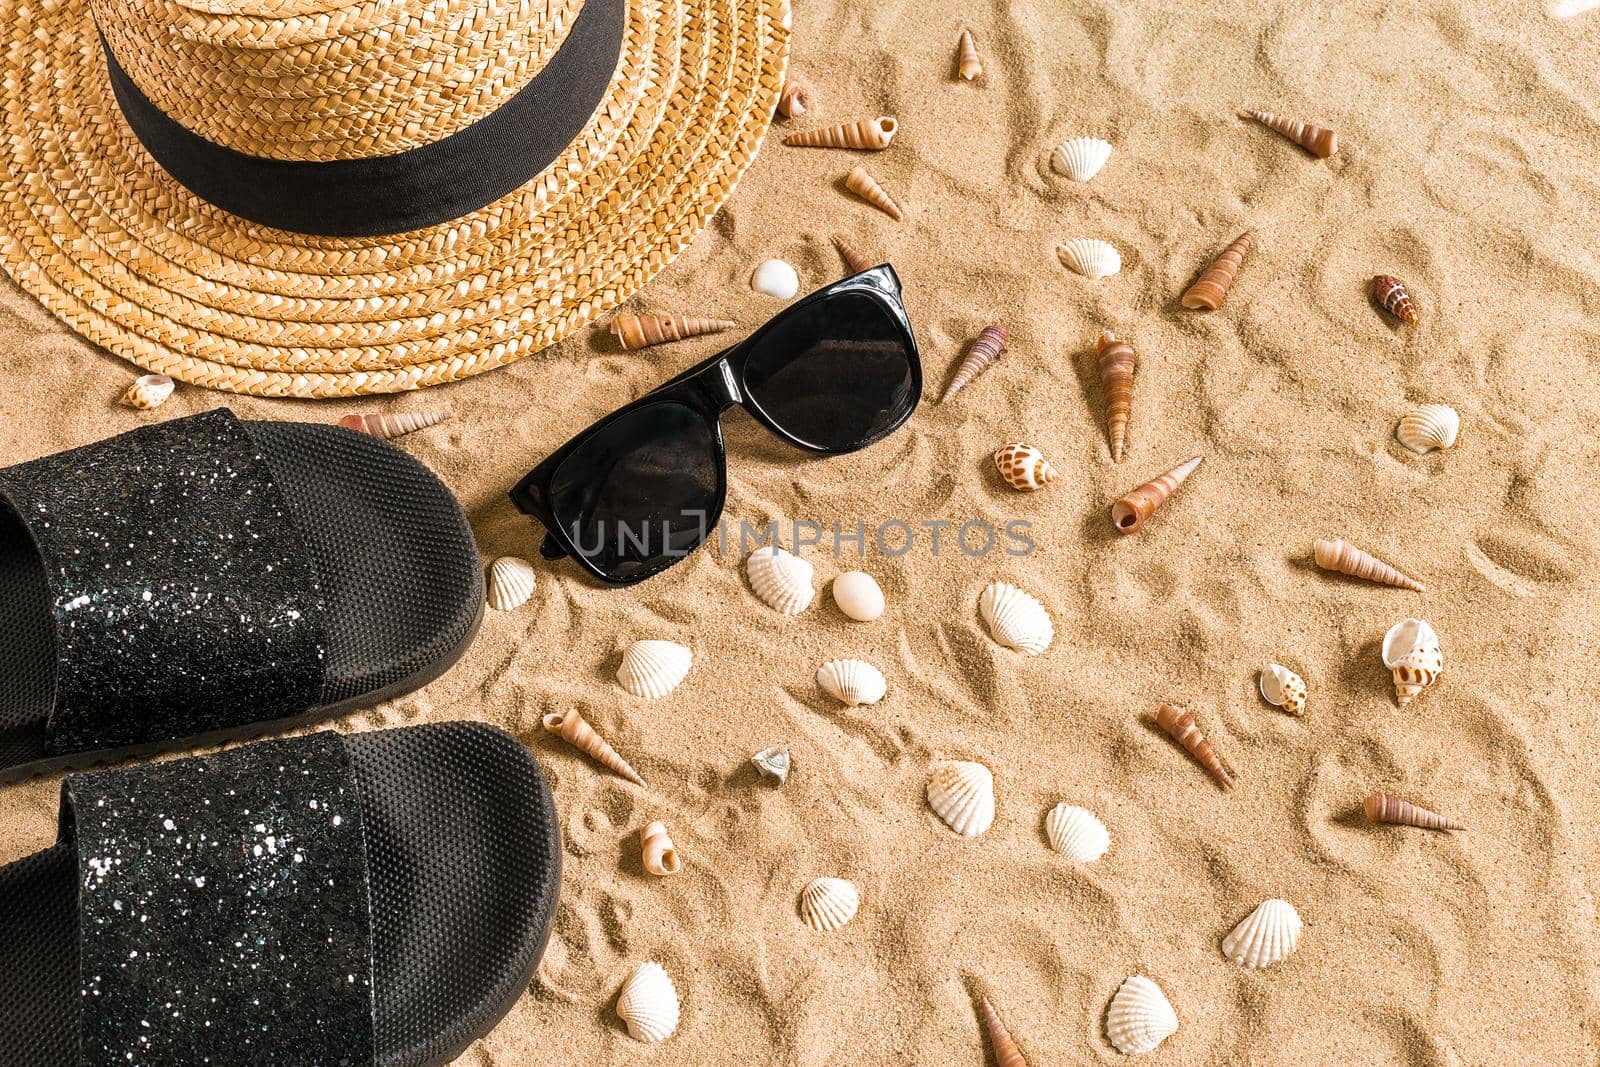 Summer beachwear, flip flops, hat, sunglasses and seashells on sand beach. Top view. Copy space. Still life mockup flat lay